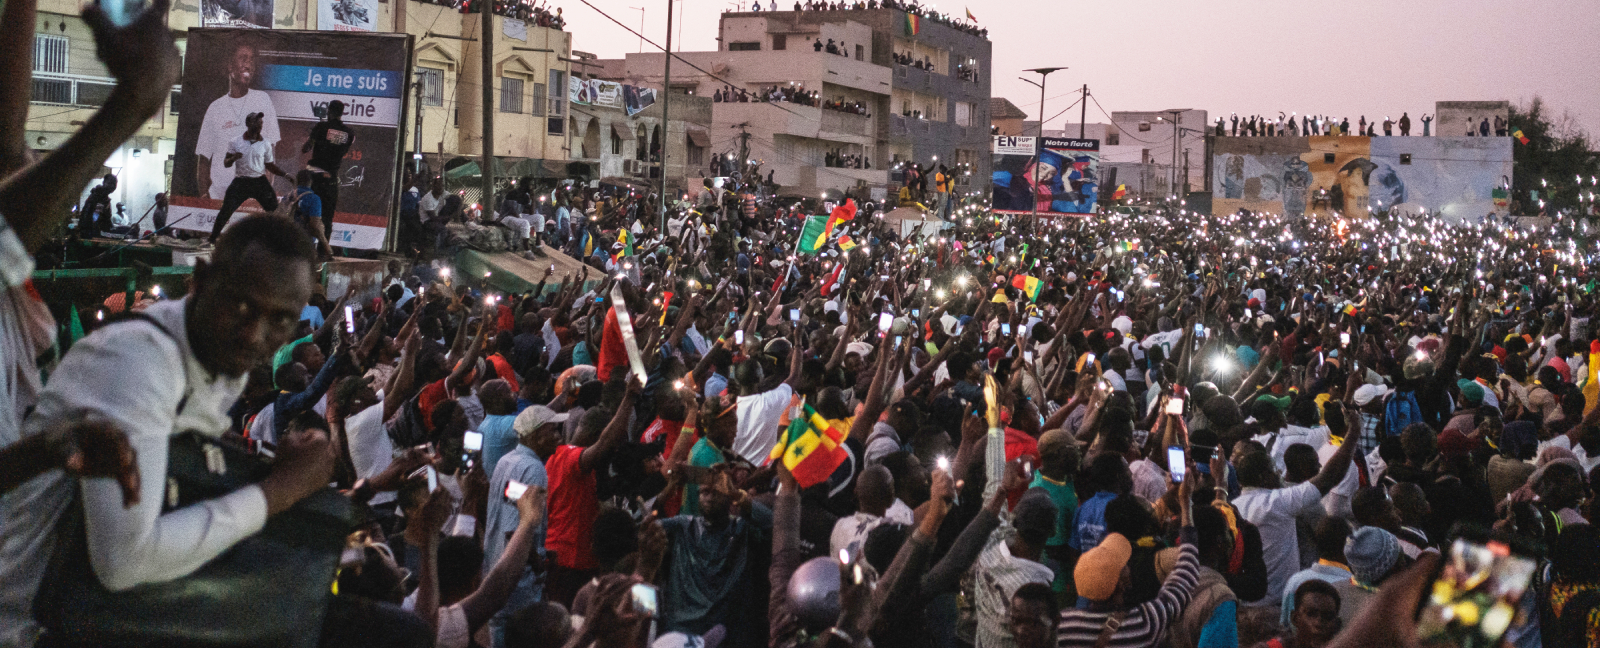 An opposition rally in Dakar, Senegal.